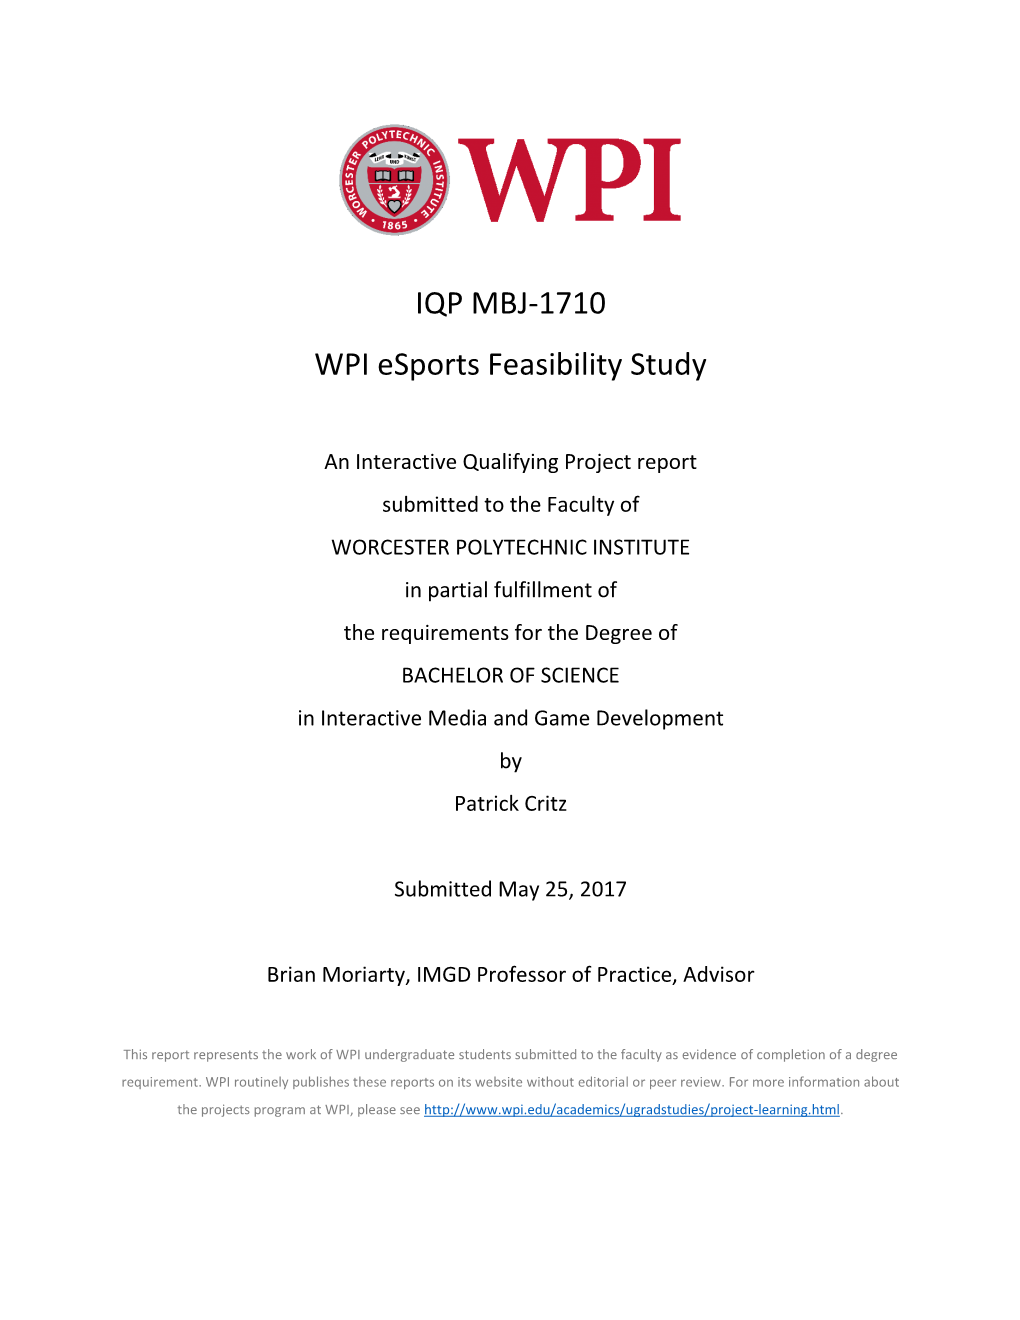 IQP MBJ-1710 WPI Esports Feasibility Study